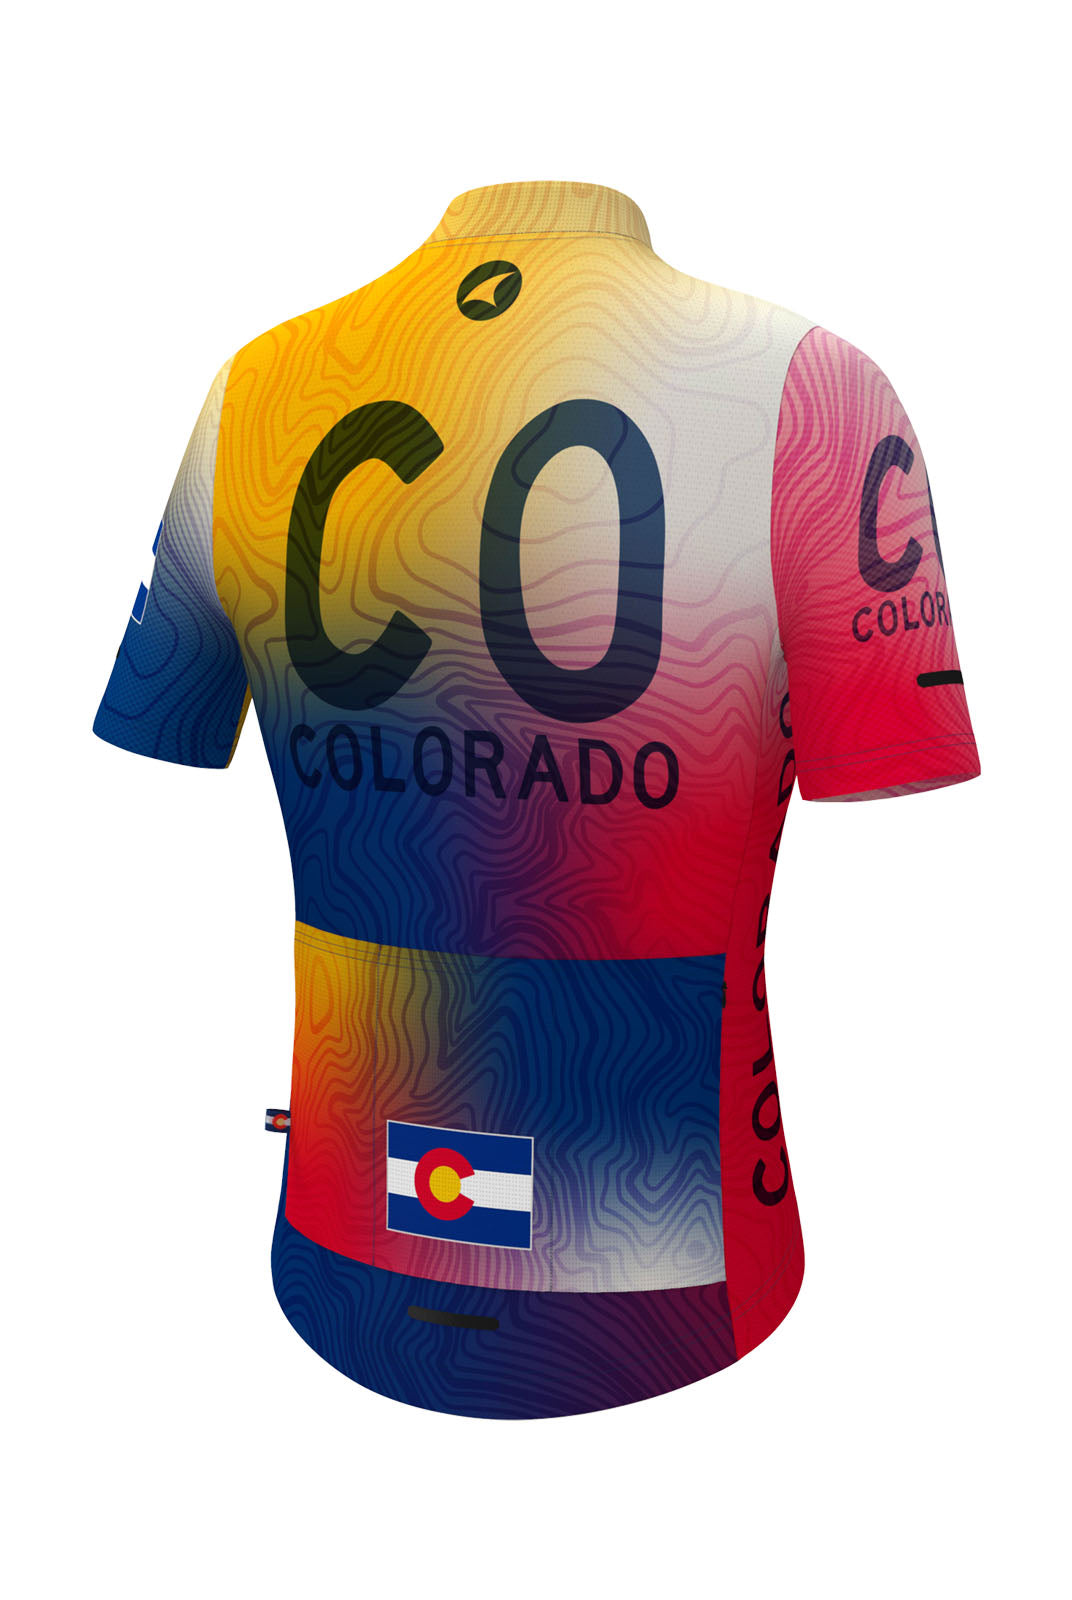 Women's Colorado Contour Flag Cycling Jersey - Back View